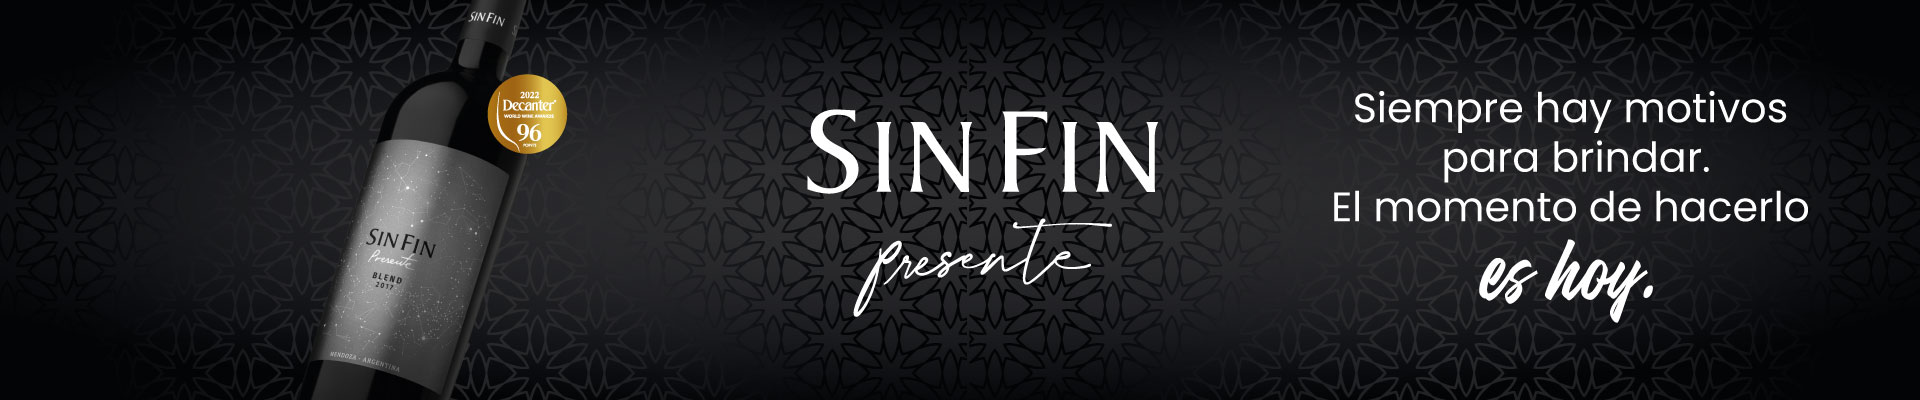 sinfin-presente-banner